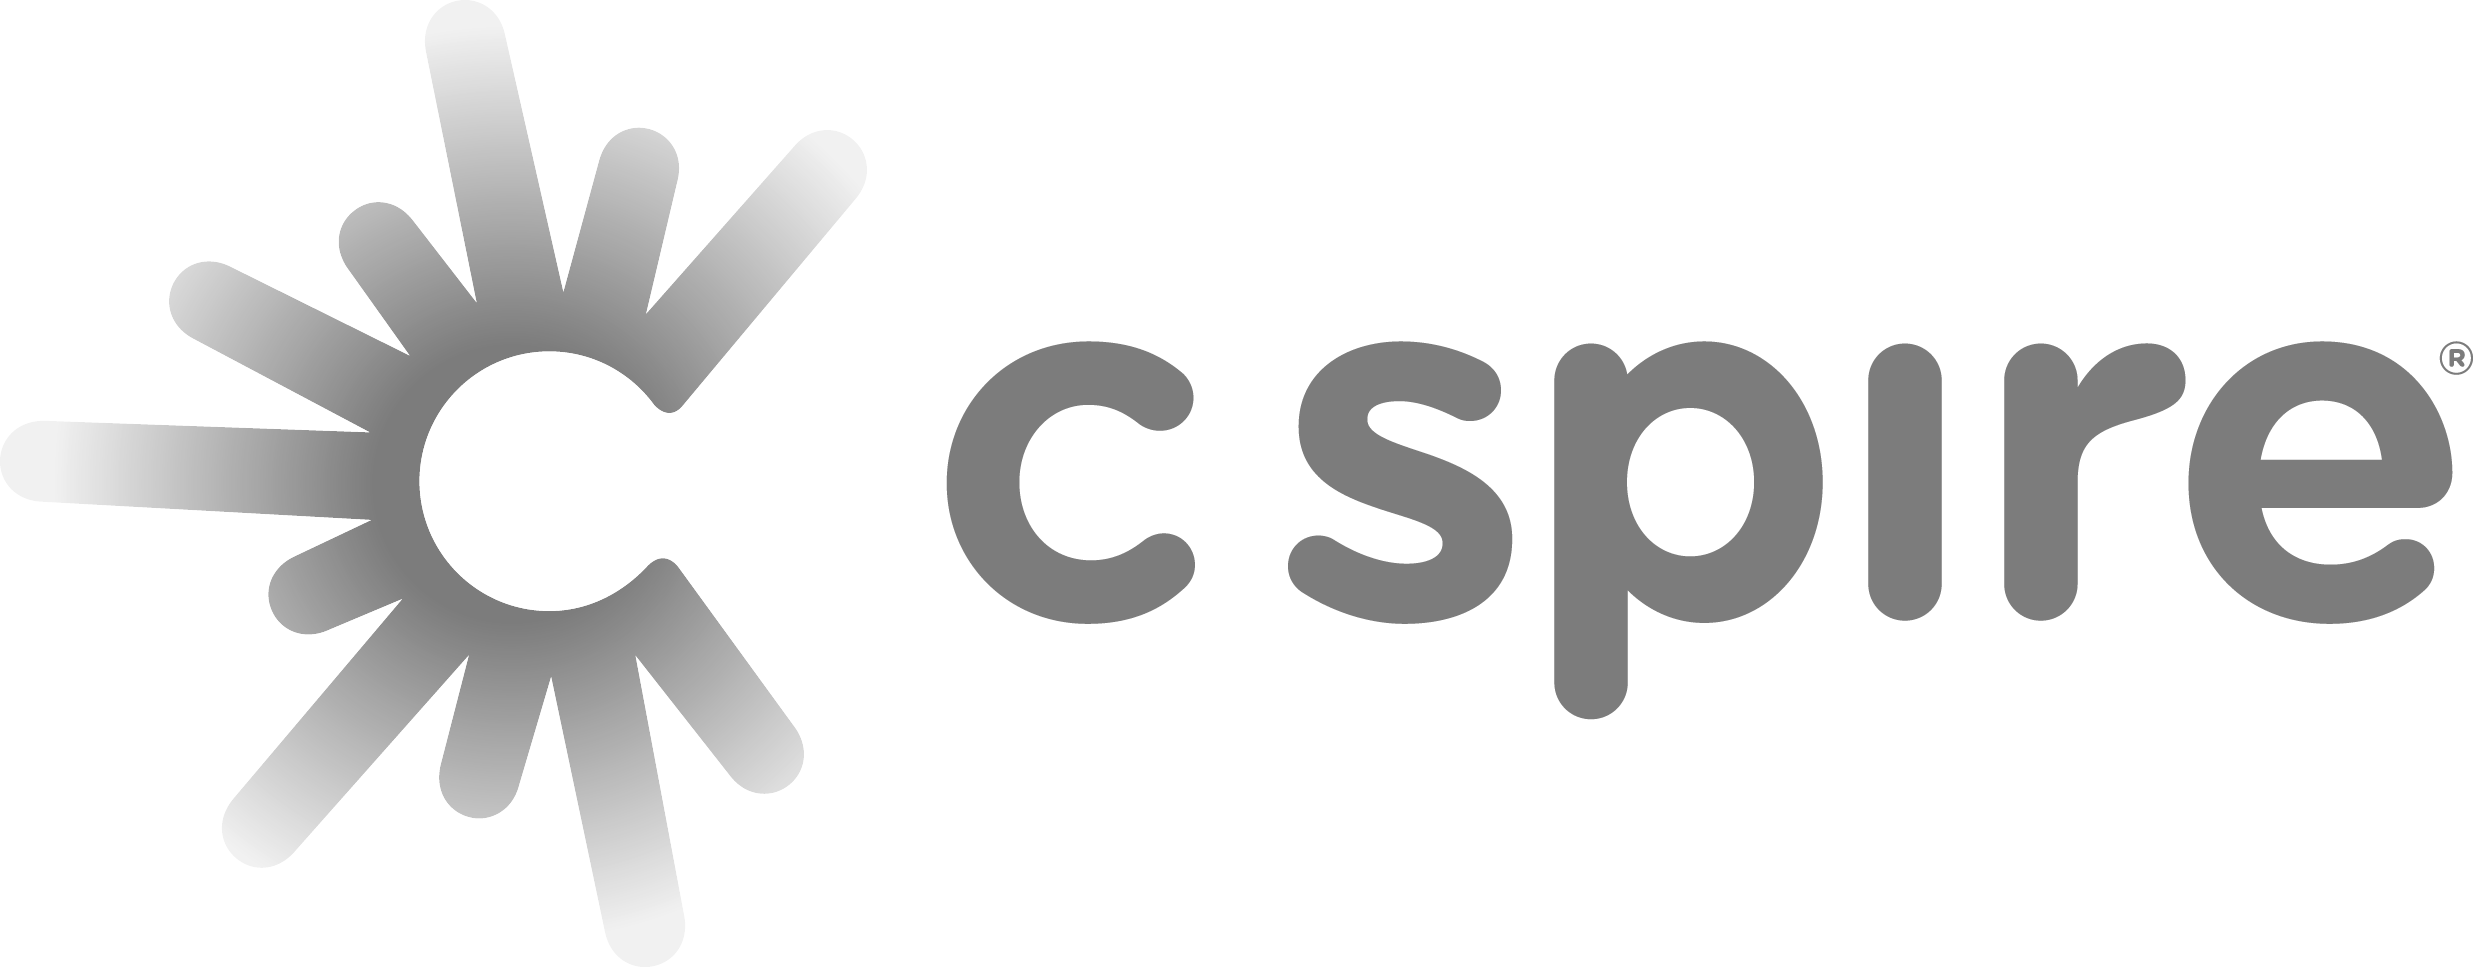 c spire logo